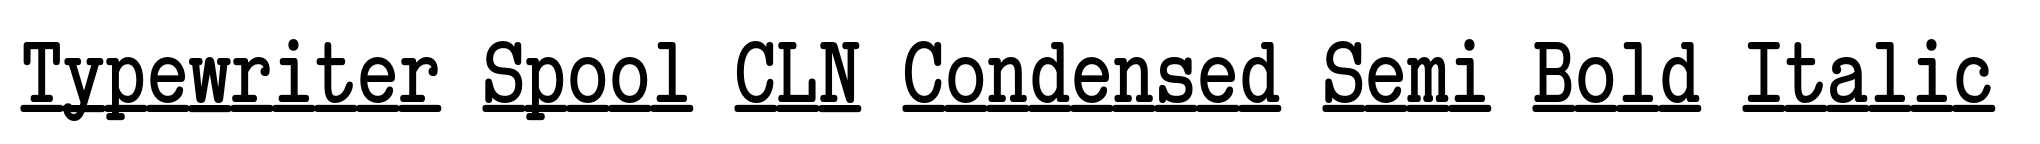 Typewriter Spool CLN Condensed Semi Bold Italic image